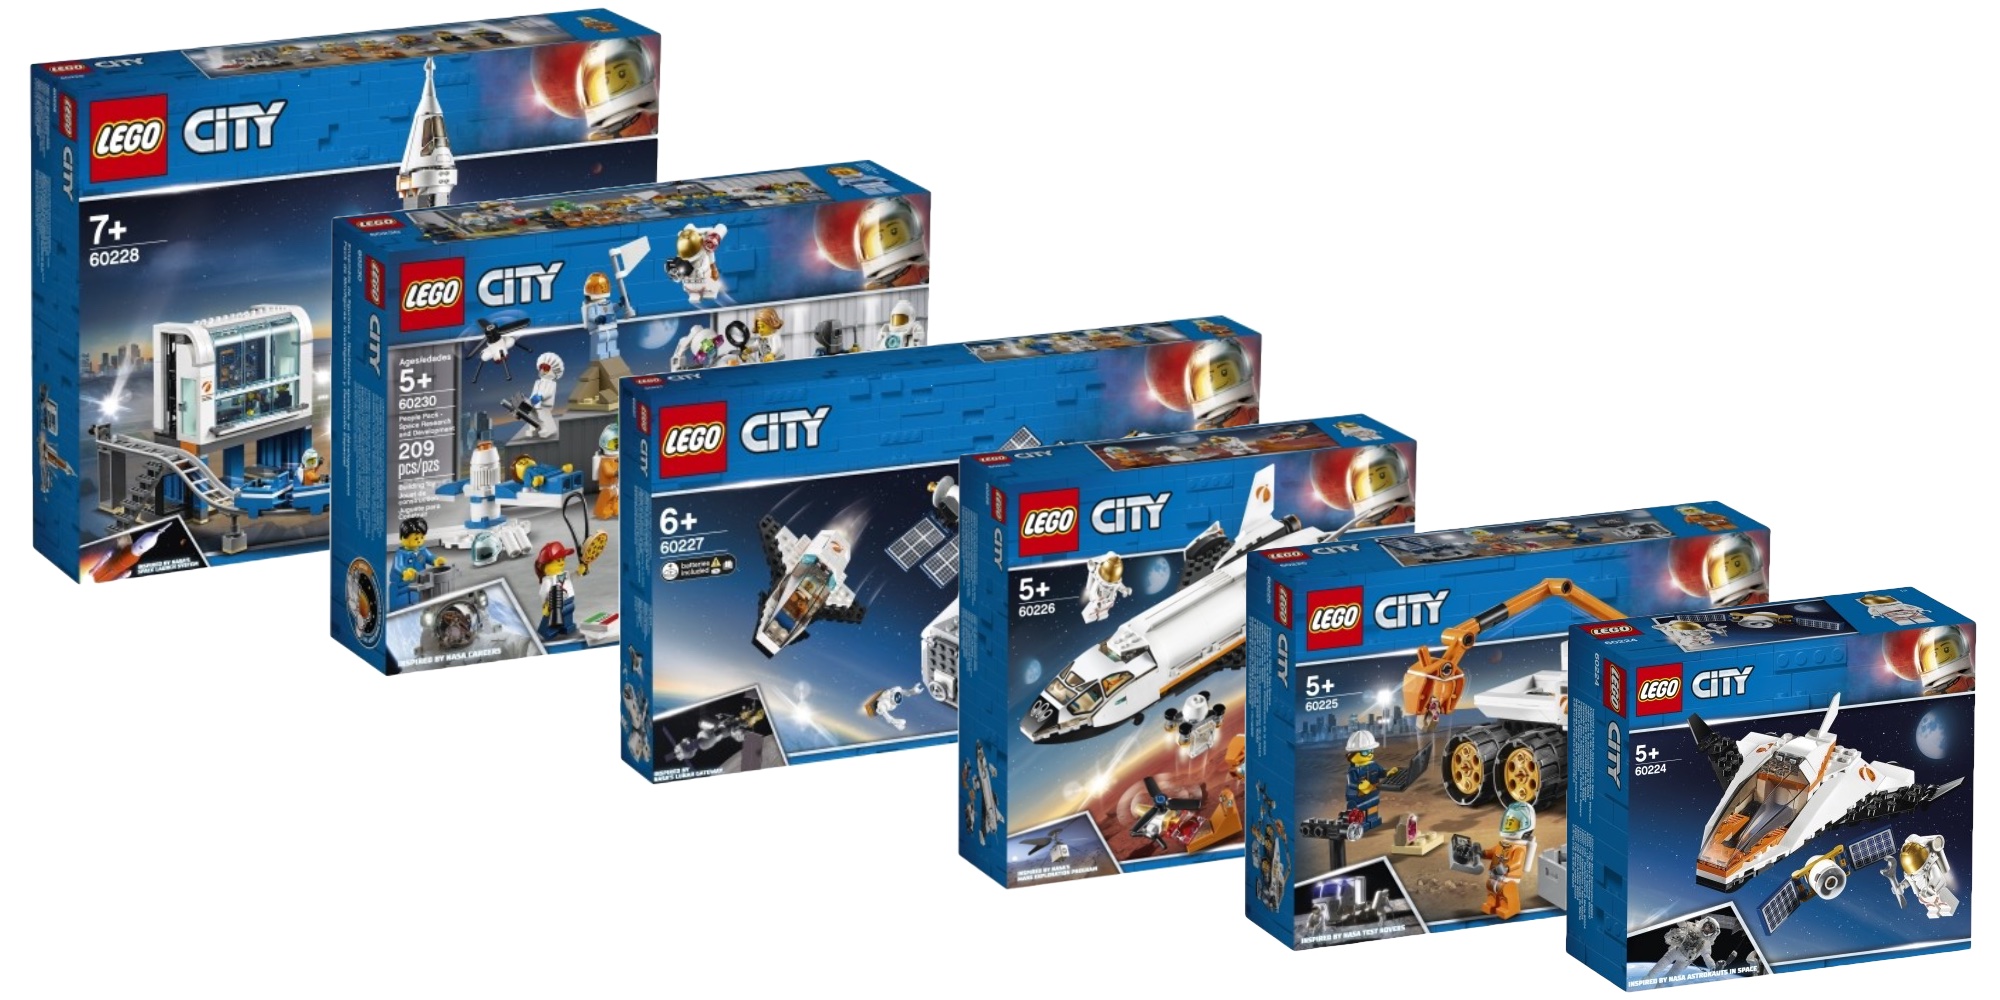 lego city 2019 space sets